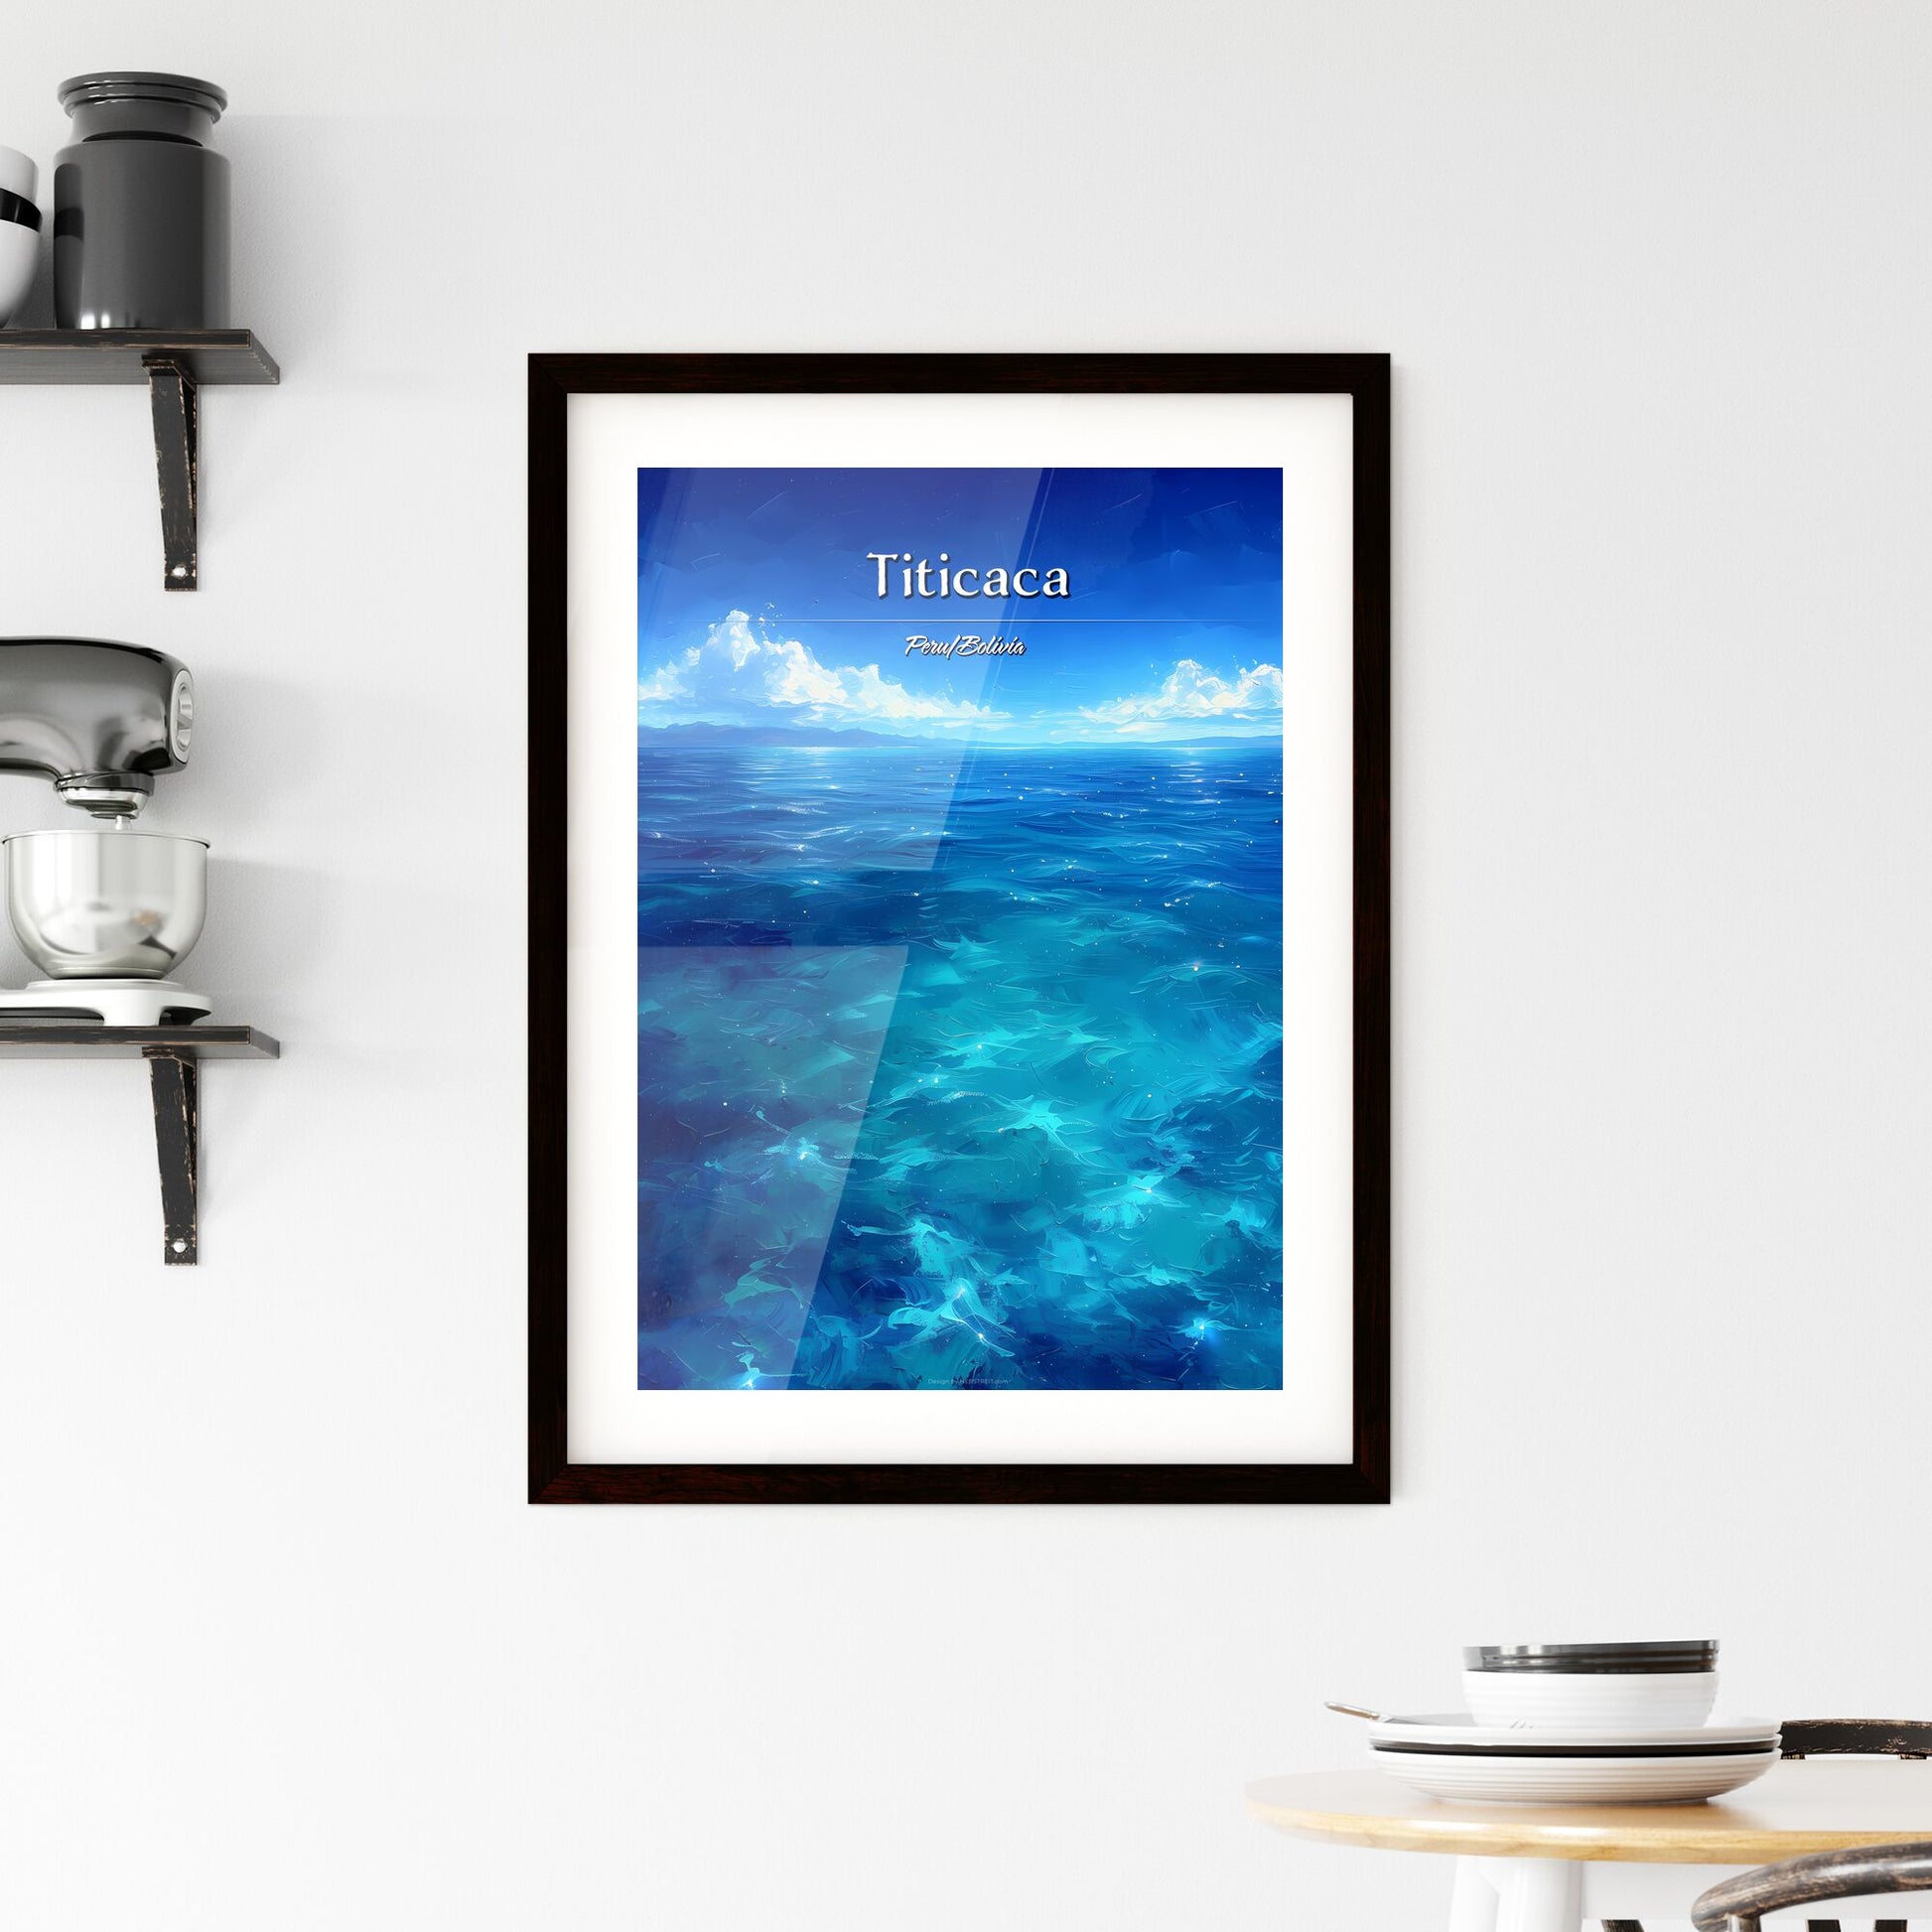 Titicaca, Peru/Bolivia - Art print of a blue ocean with a blue sky and clouds Default Title